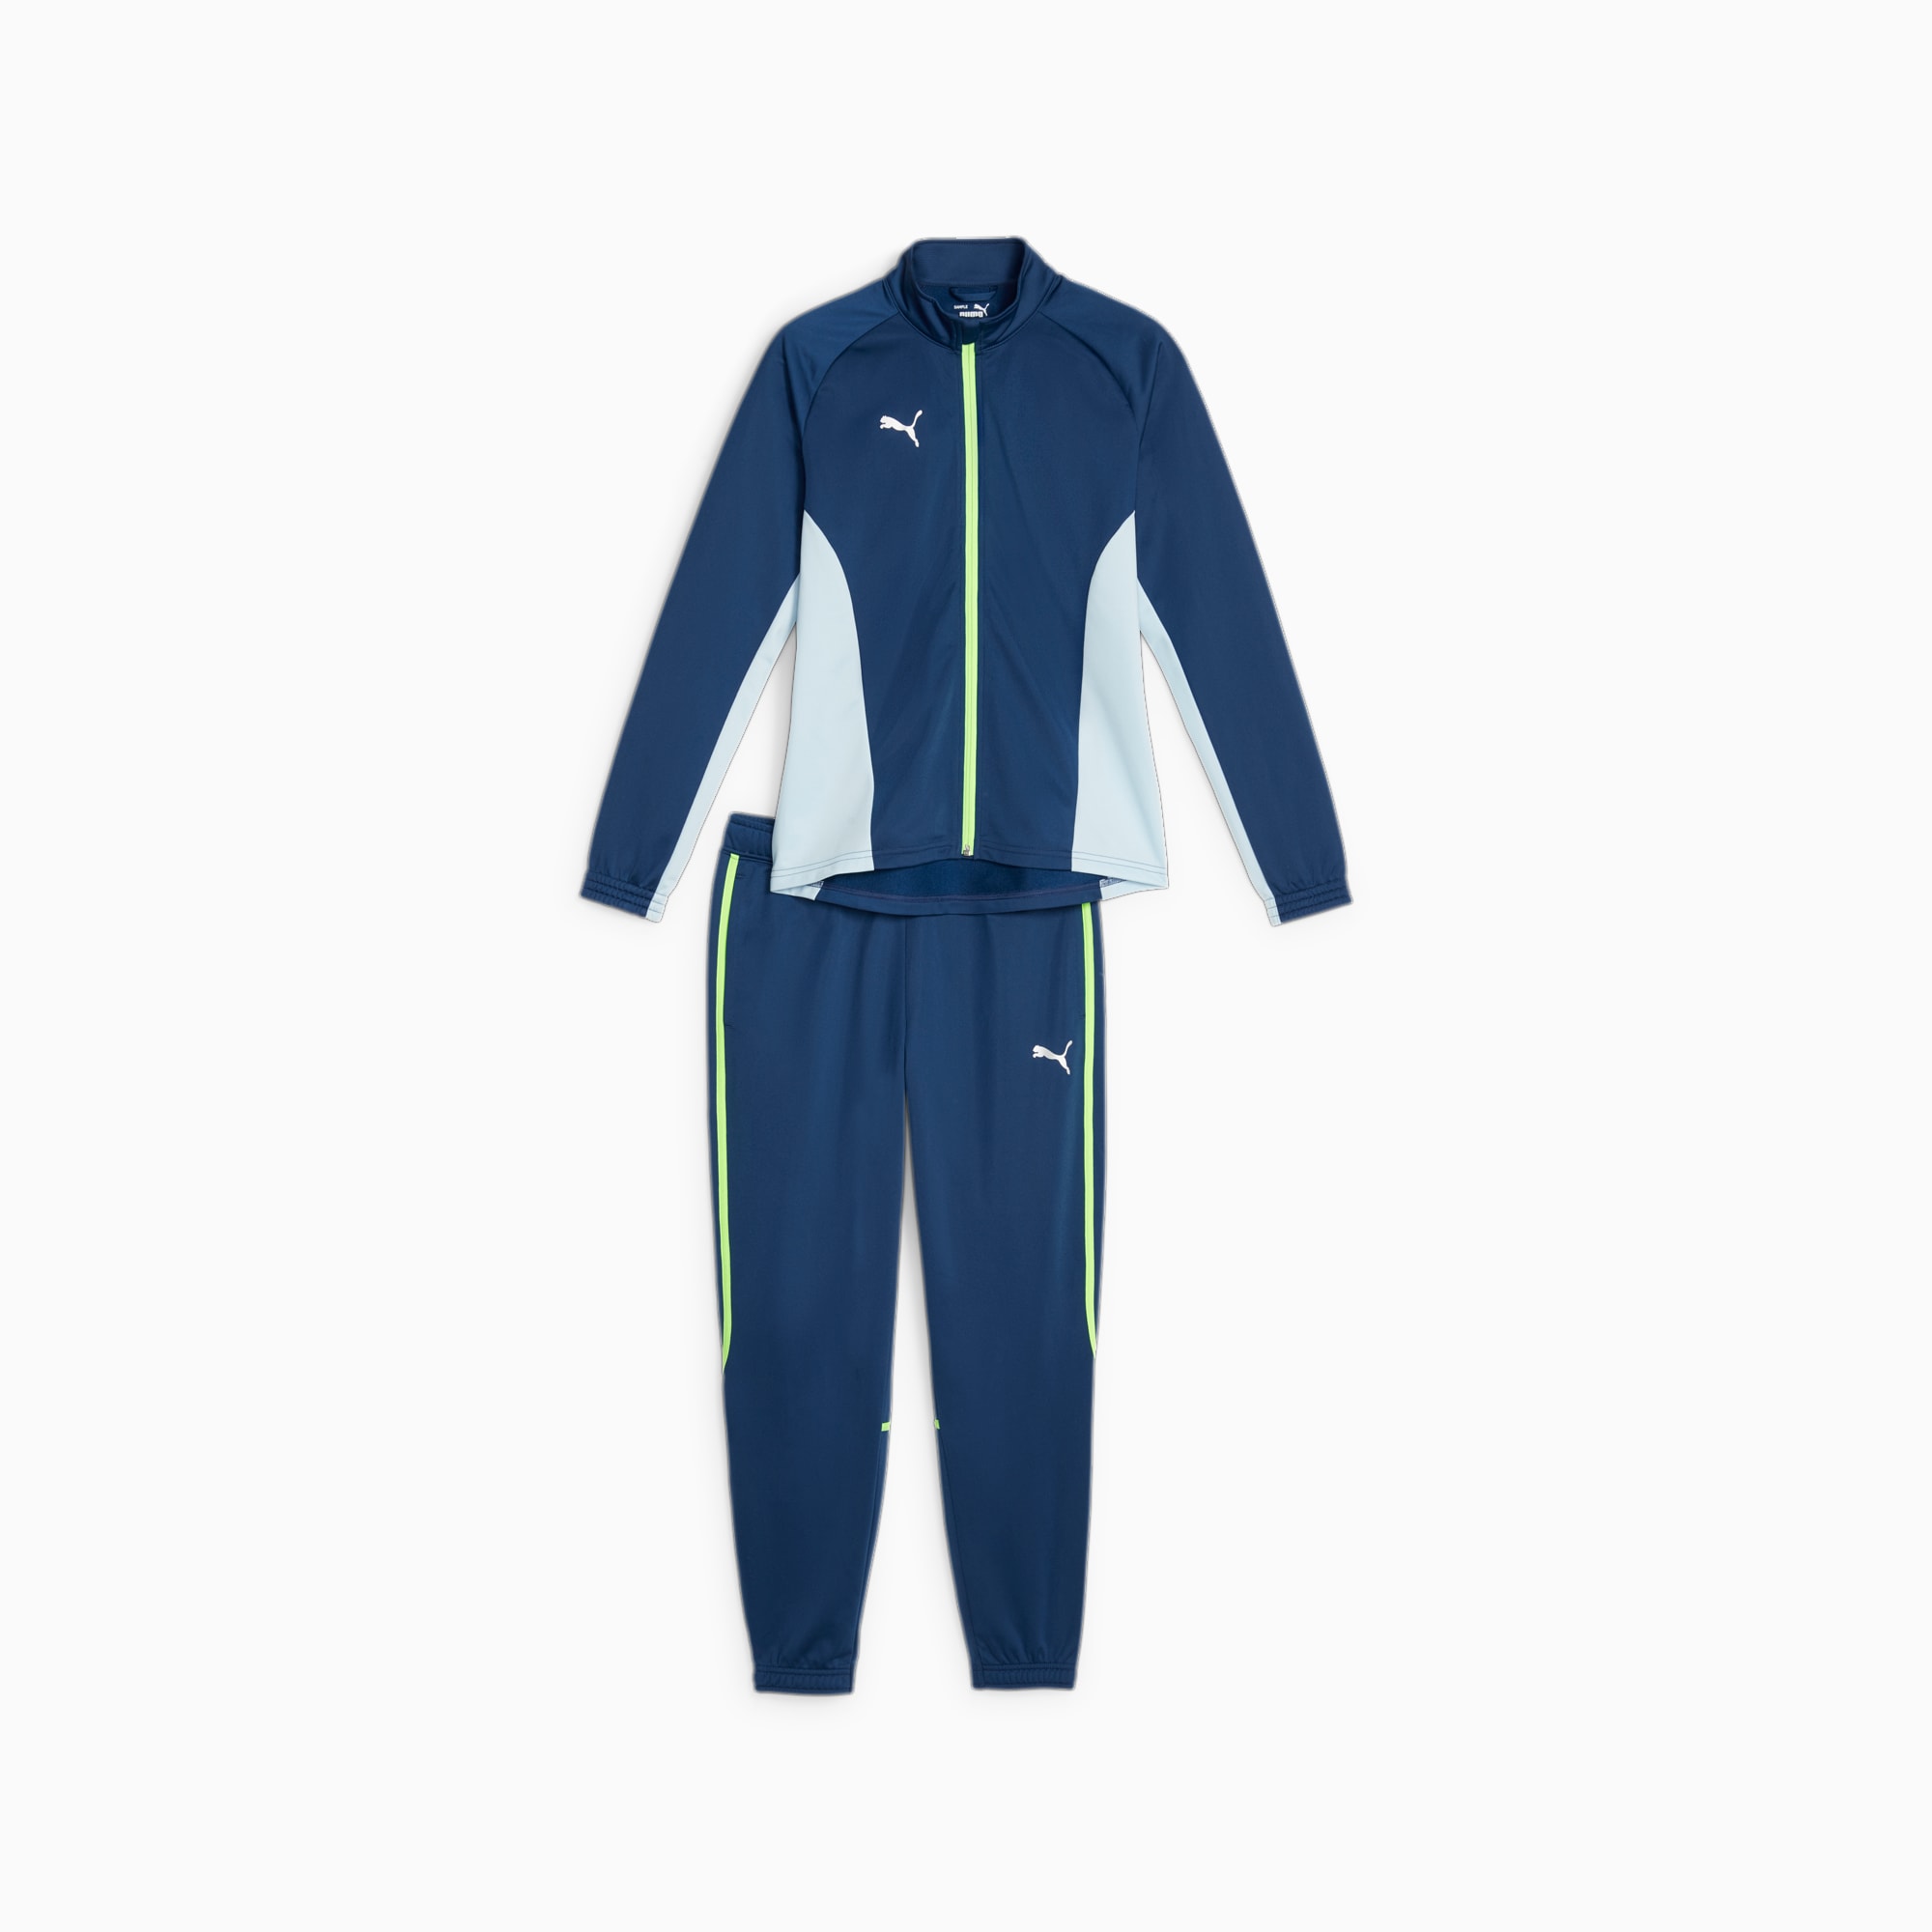 PUMA IndividualBLAZE Fußball Trainingsanzug, Blau/Silber, Größe: XS, Kleidung